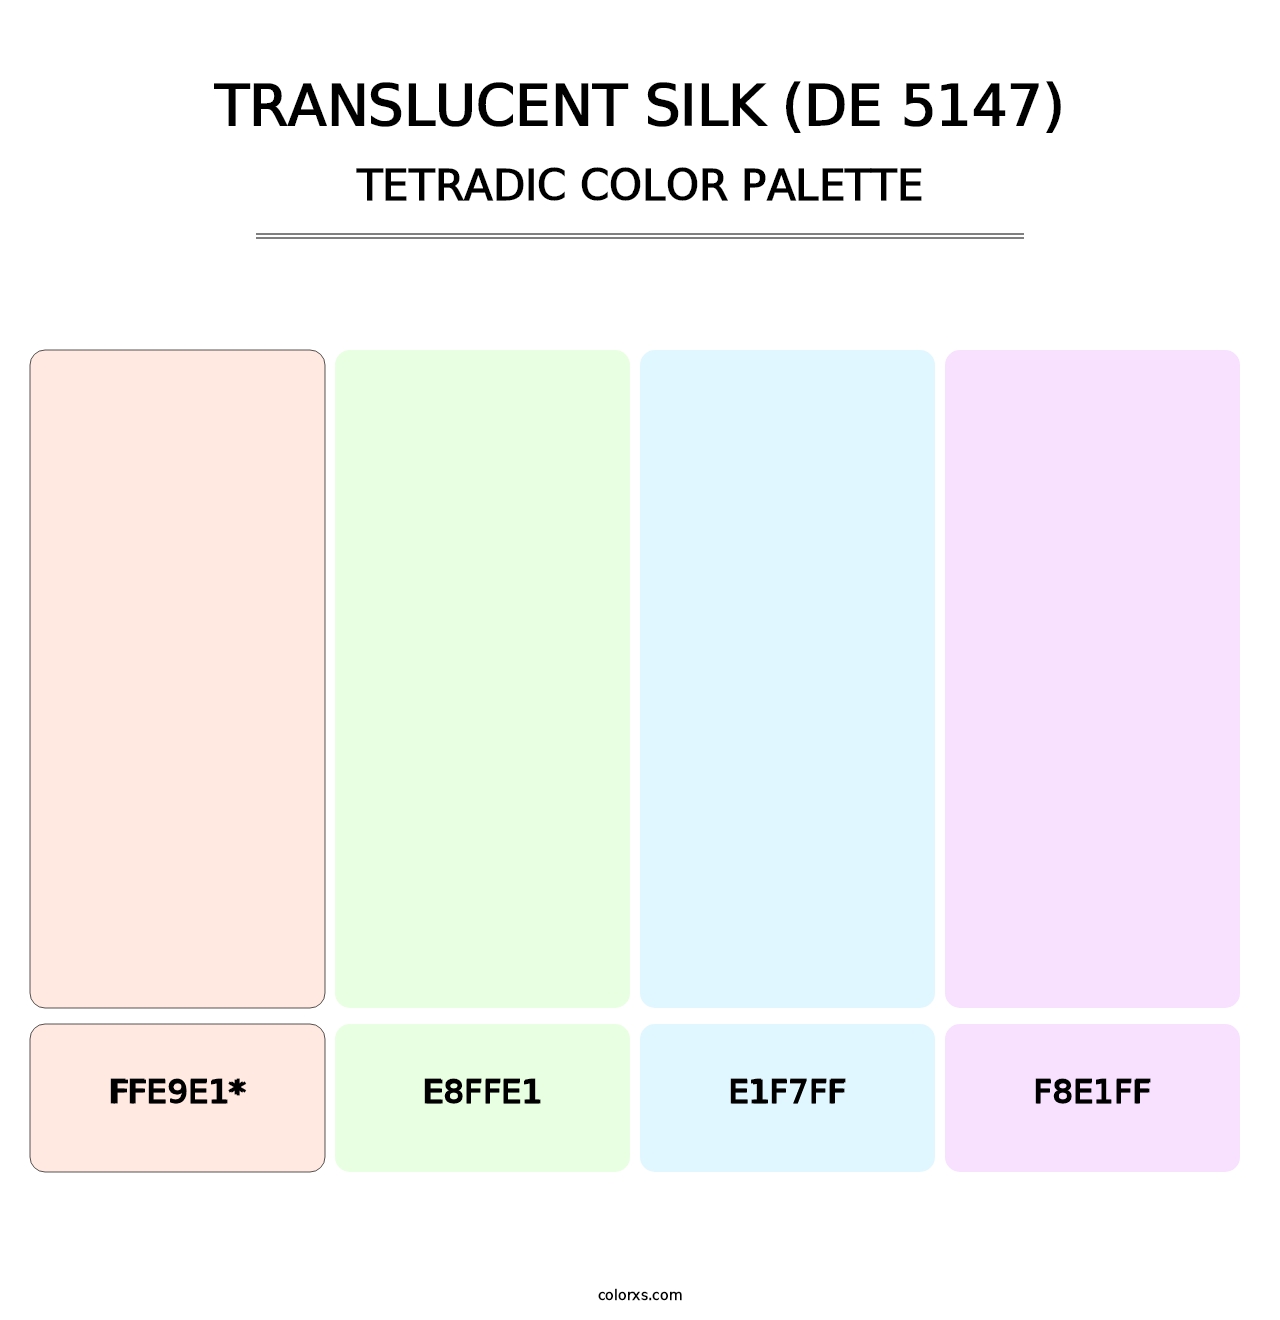 Translucent Silk (DE 5147) - Tetradic Color Palette